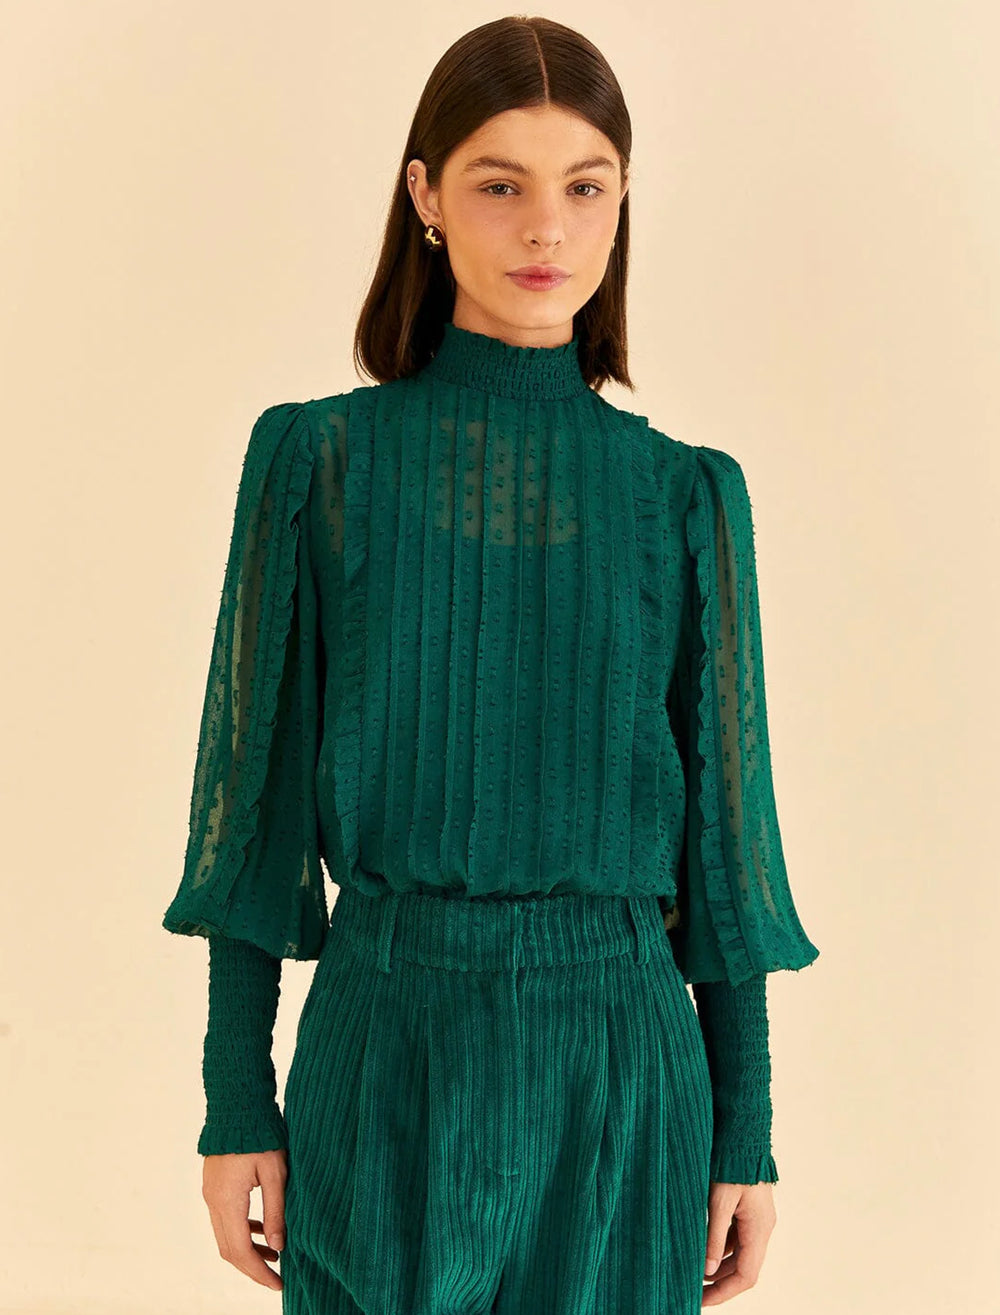 Model wearing FARM Rio's emerald ruffled blouse.